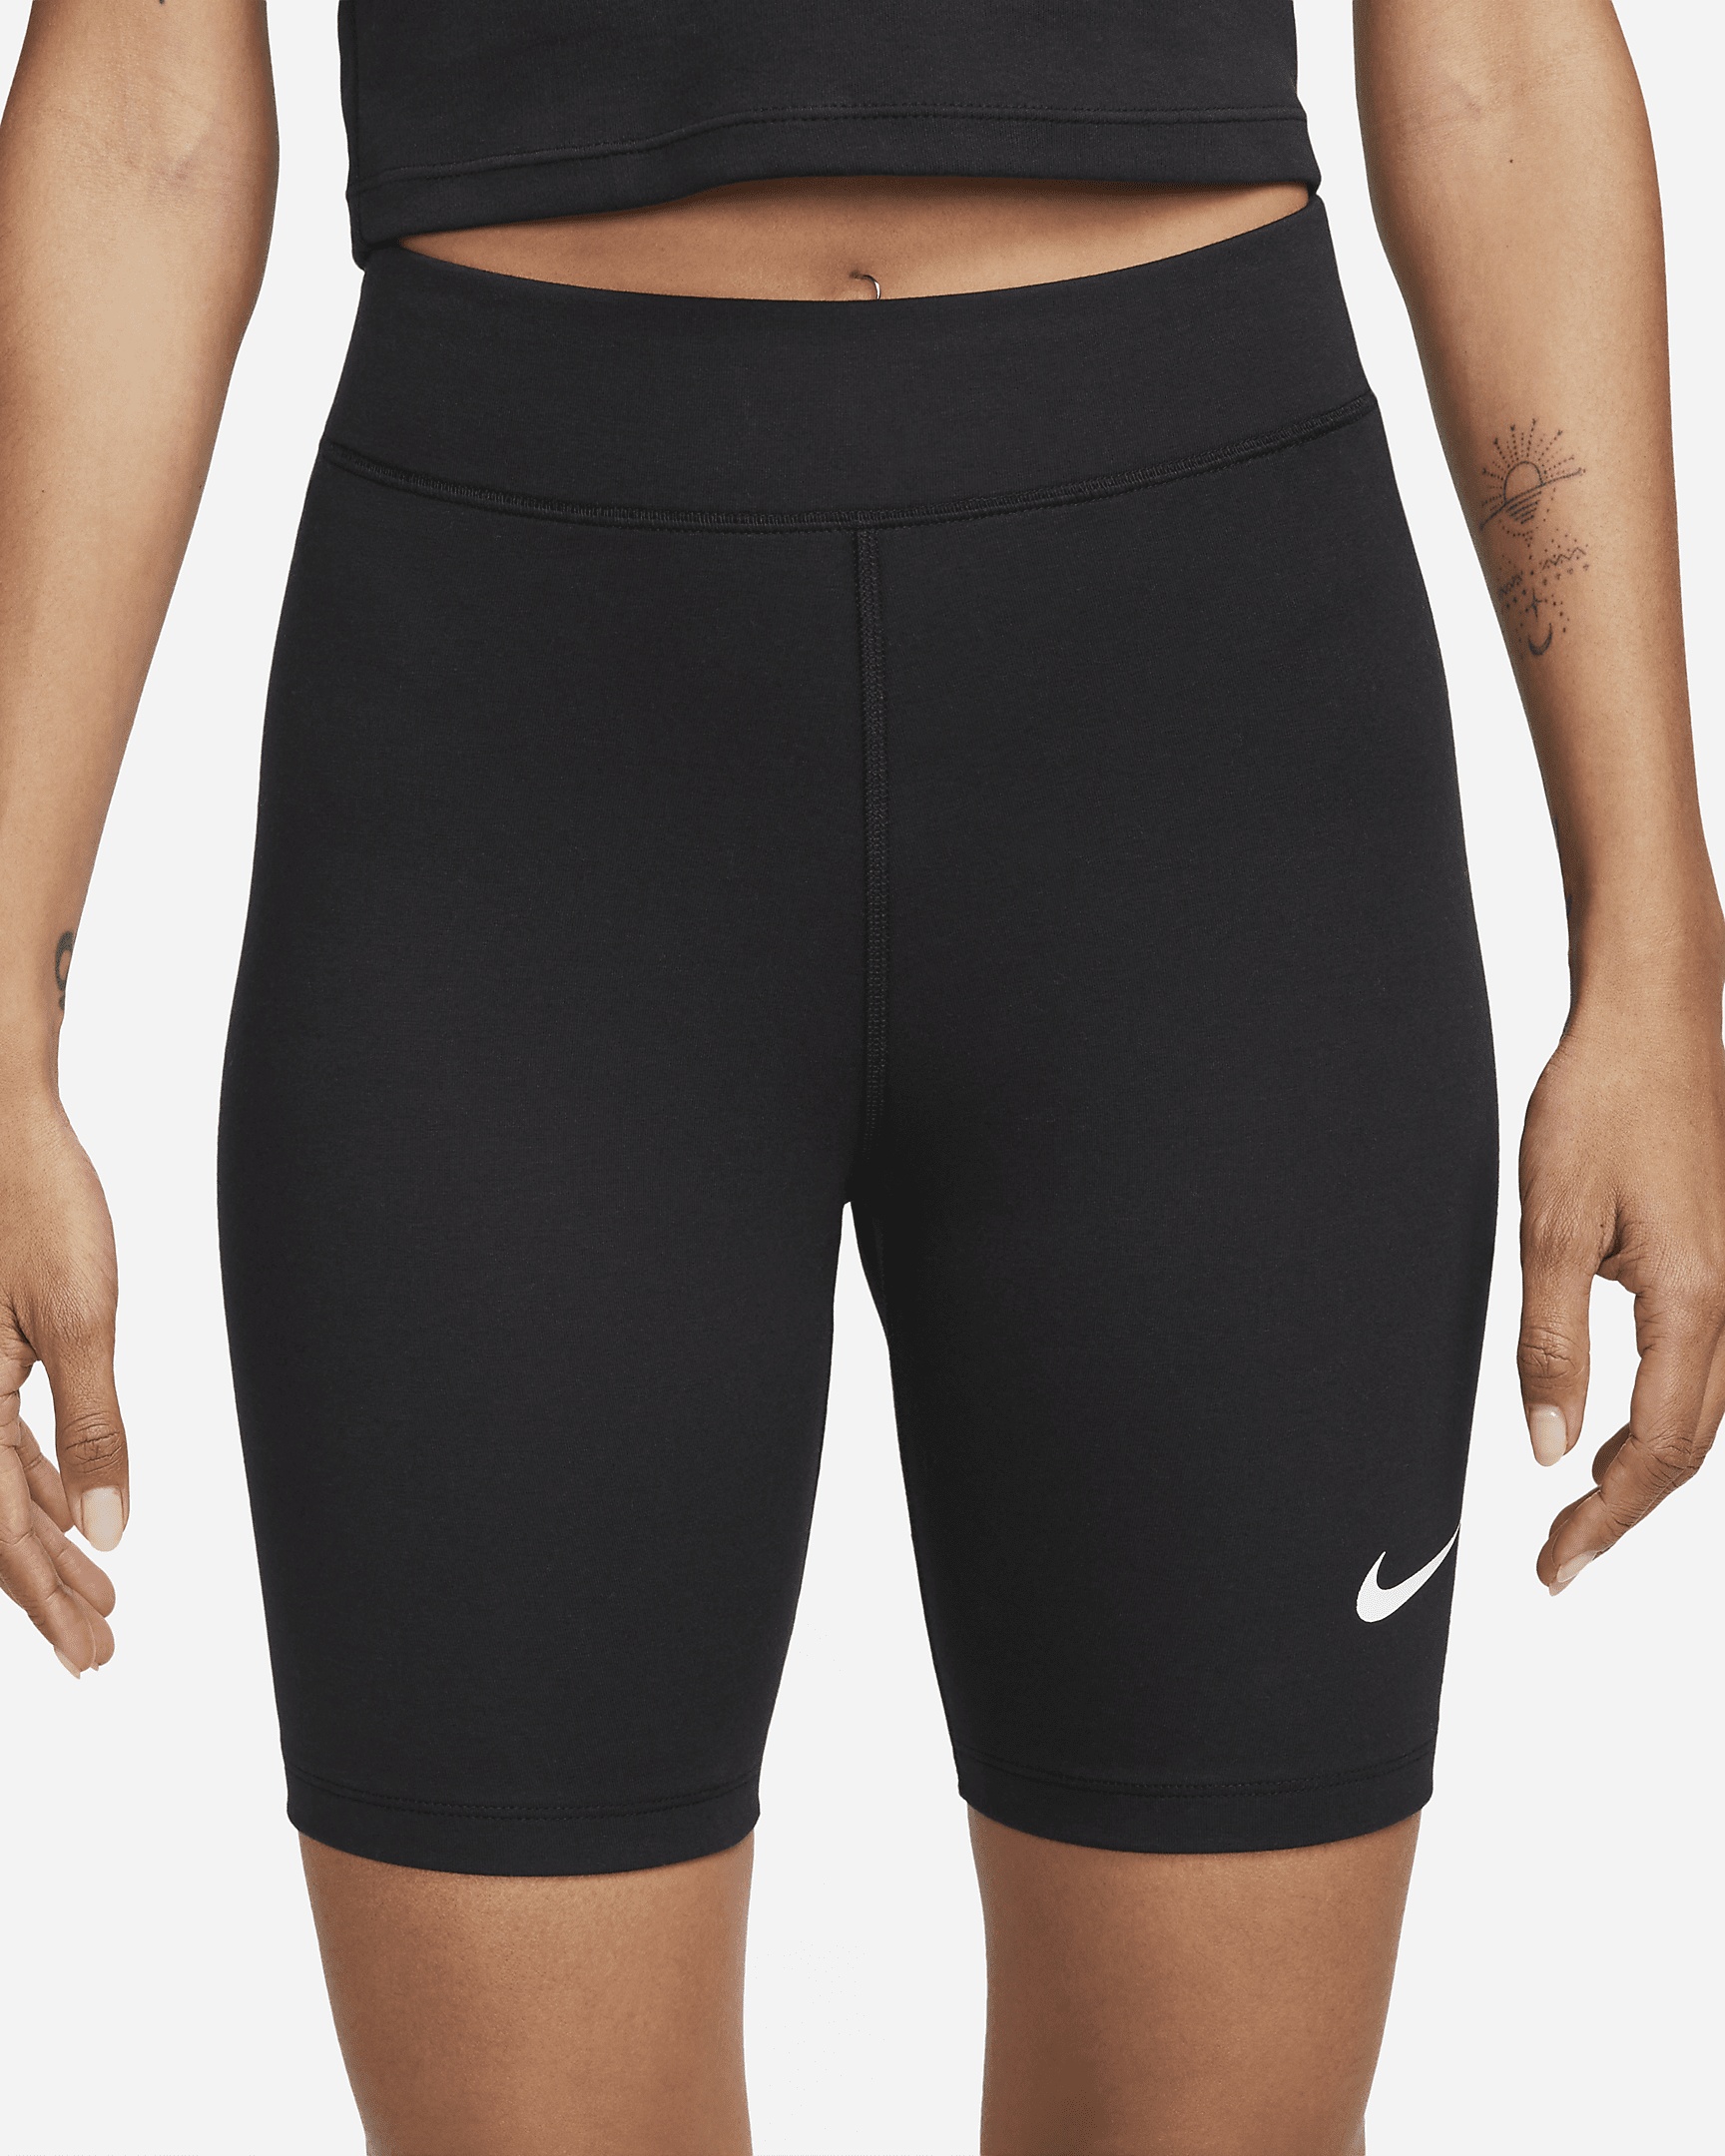 Women's Nike Sportswear Classic High-Waisted 8" Biker Shorts - 2